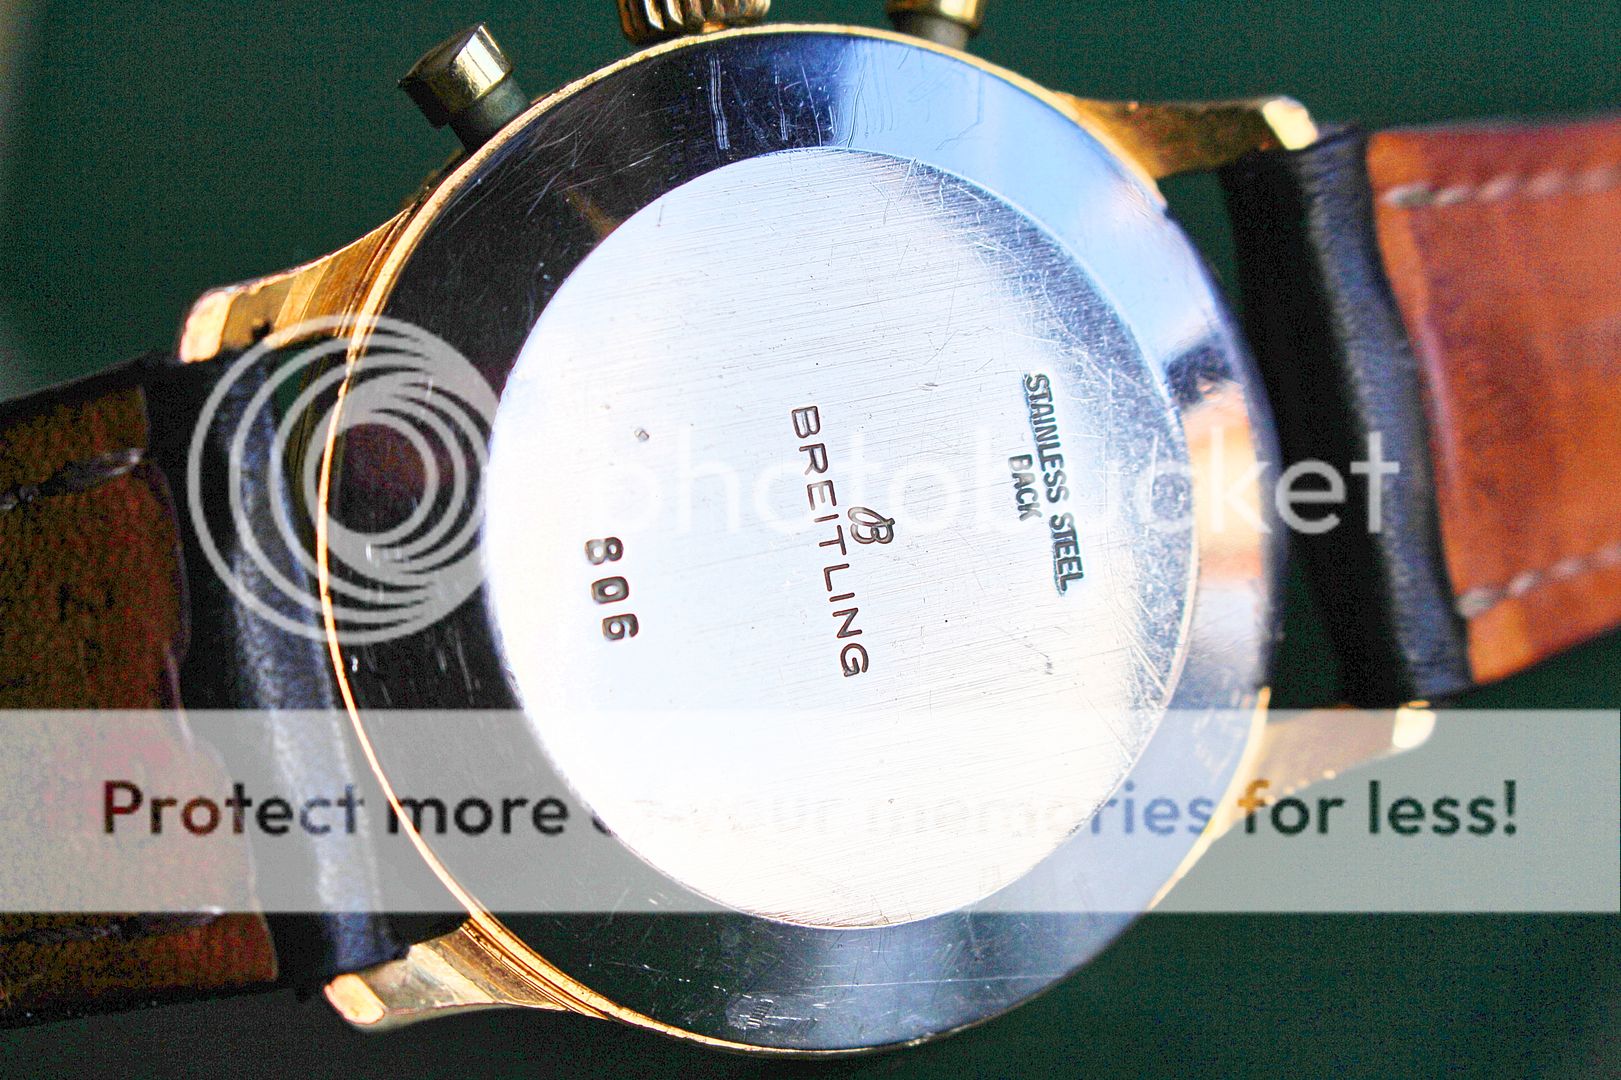 Breitling - Navitimer Chronograph - 806 photo 8_zpsvdv99m6h.jpg